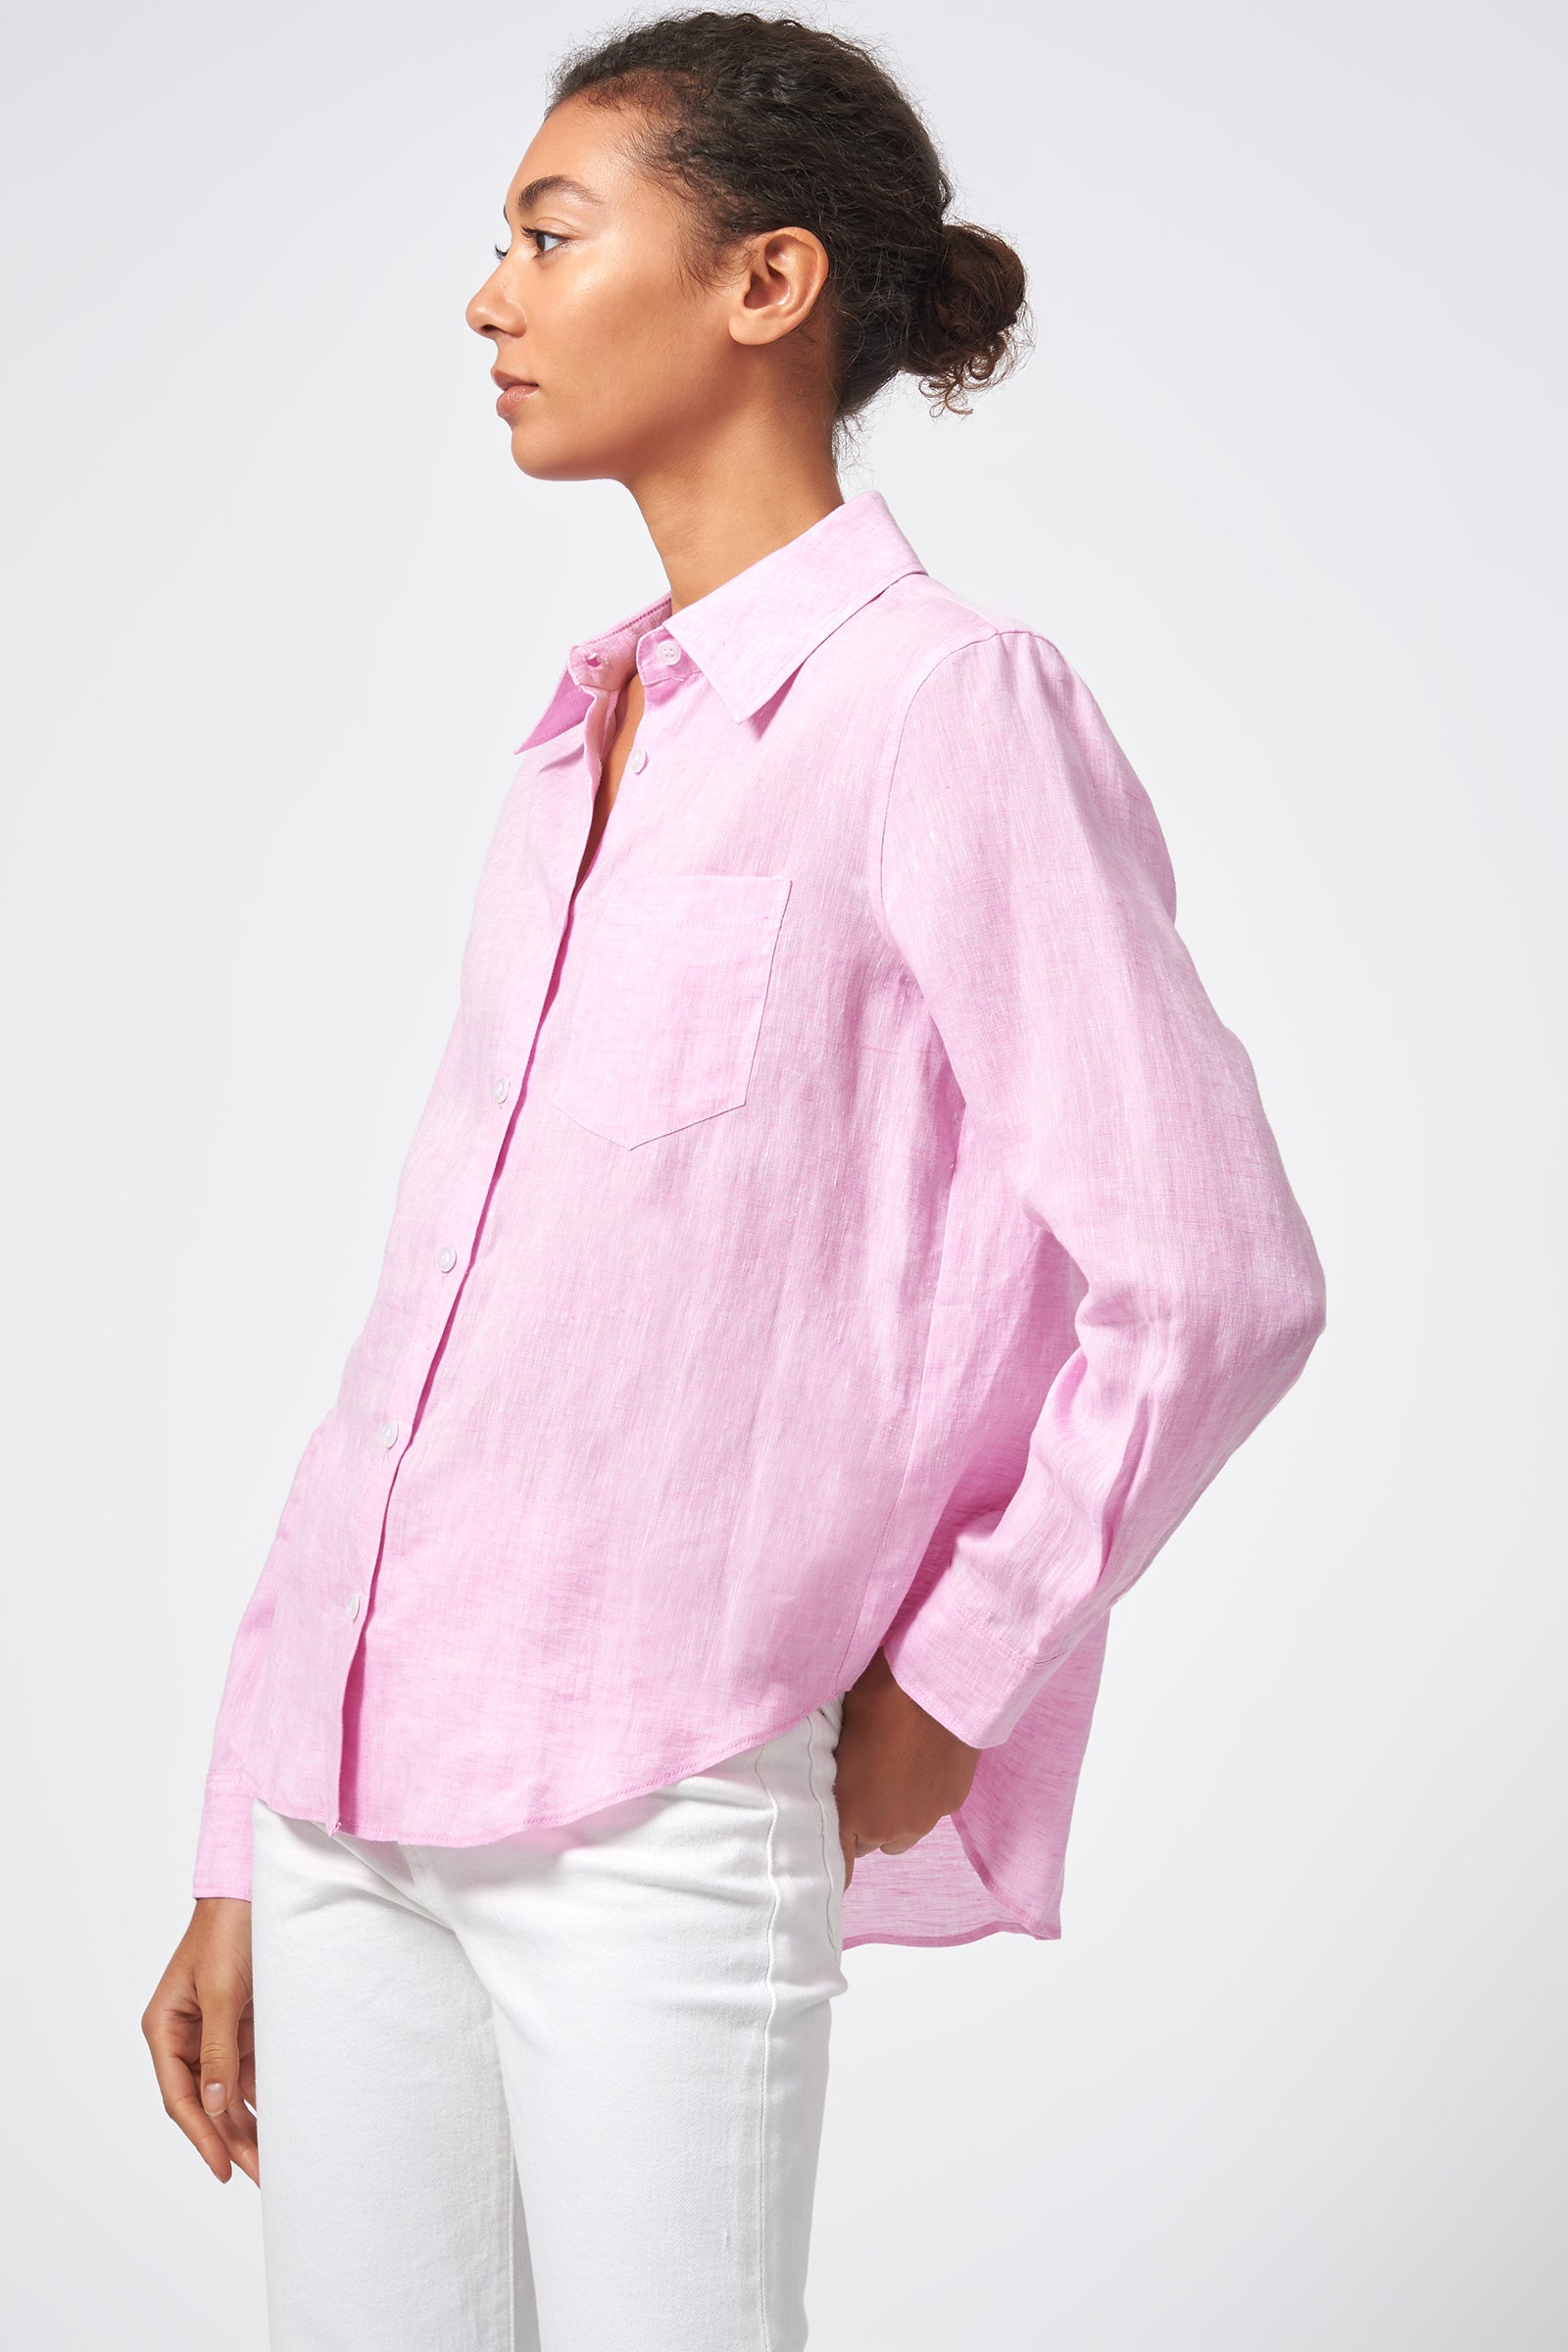 Kal Rieman Classic Tailored Shirt European Linen Pink On Model SIde View